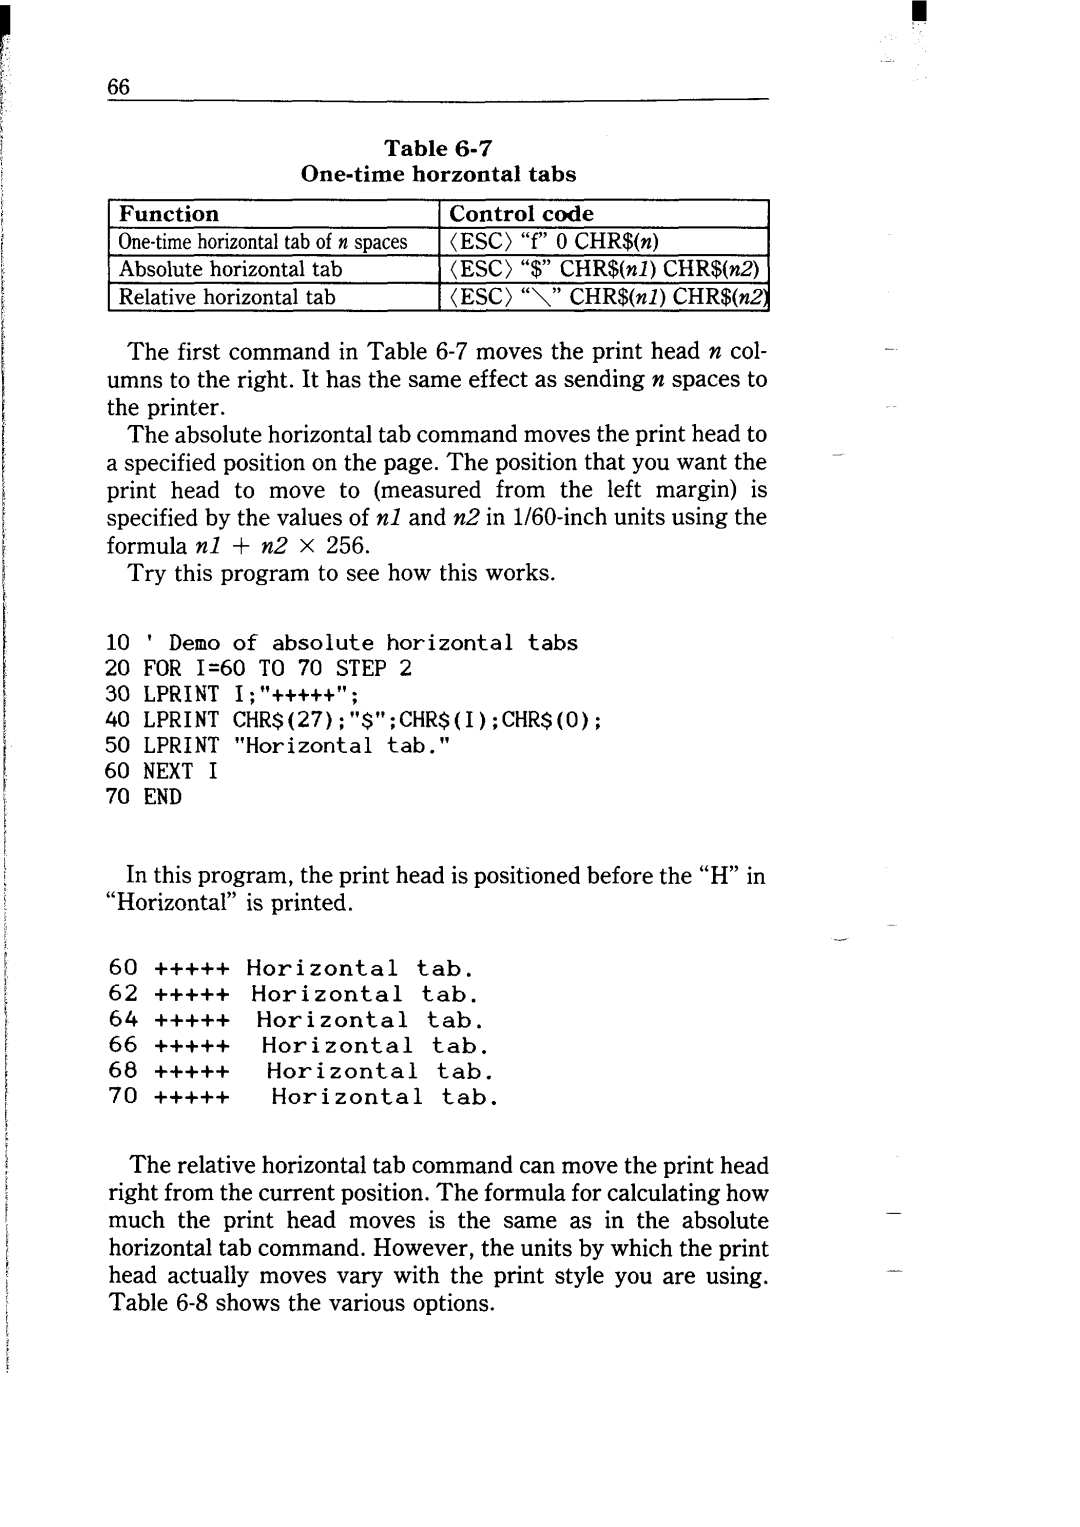 Star Micronics NB-15 user manual Absolute horizontal tab Relative horizontal tab 